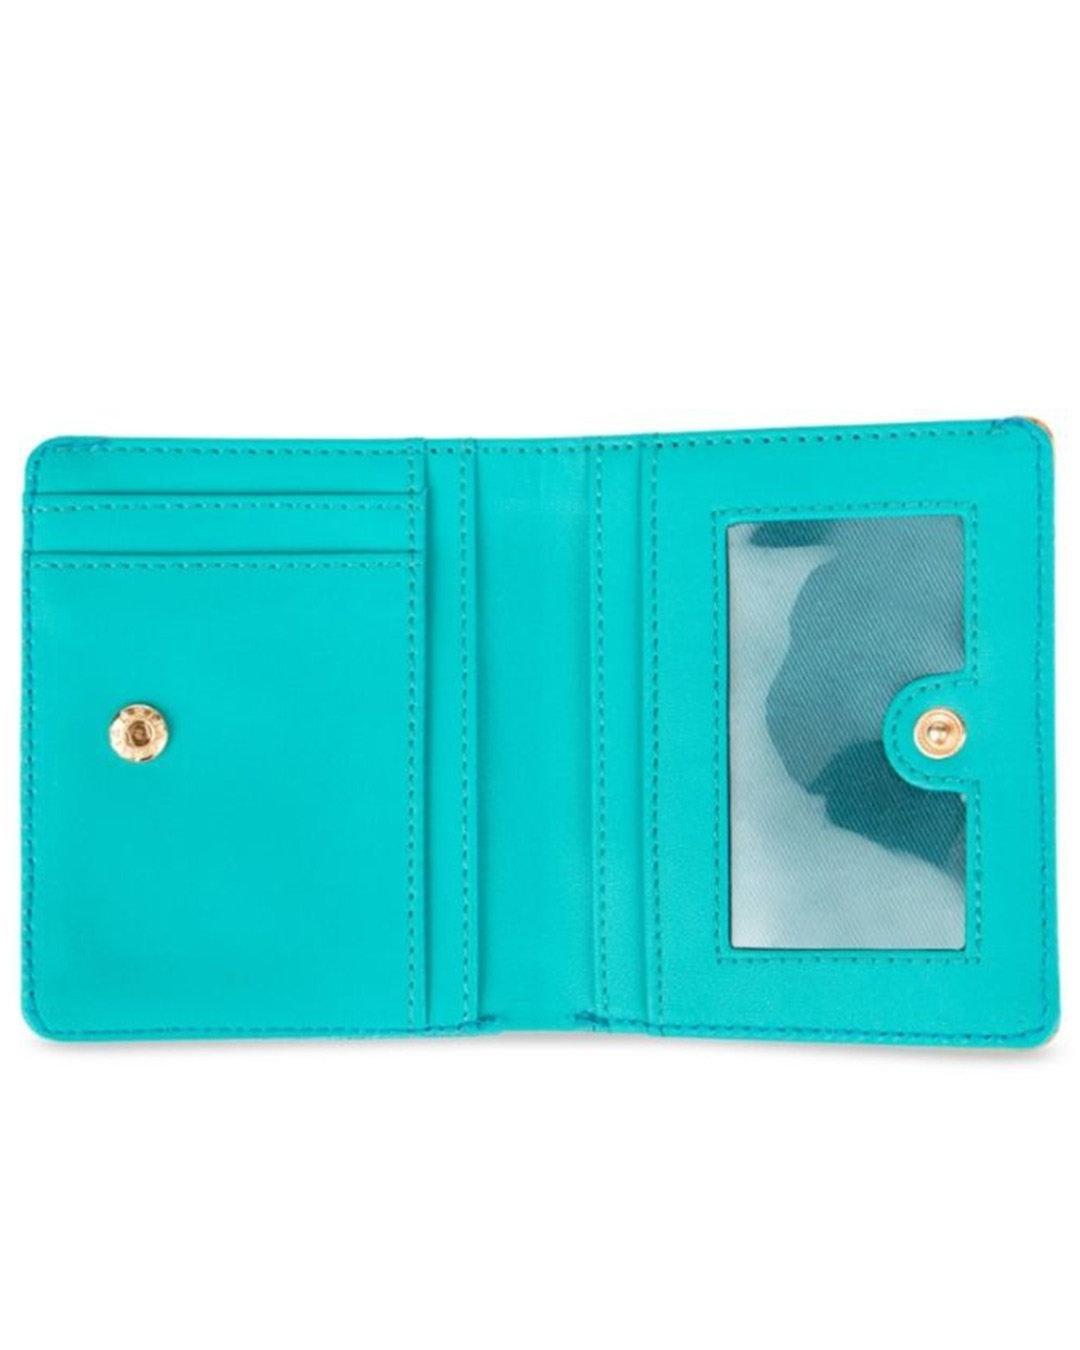 Shop Women's Teal Elephant Adventures Snap Button Wallet